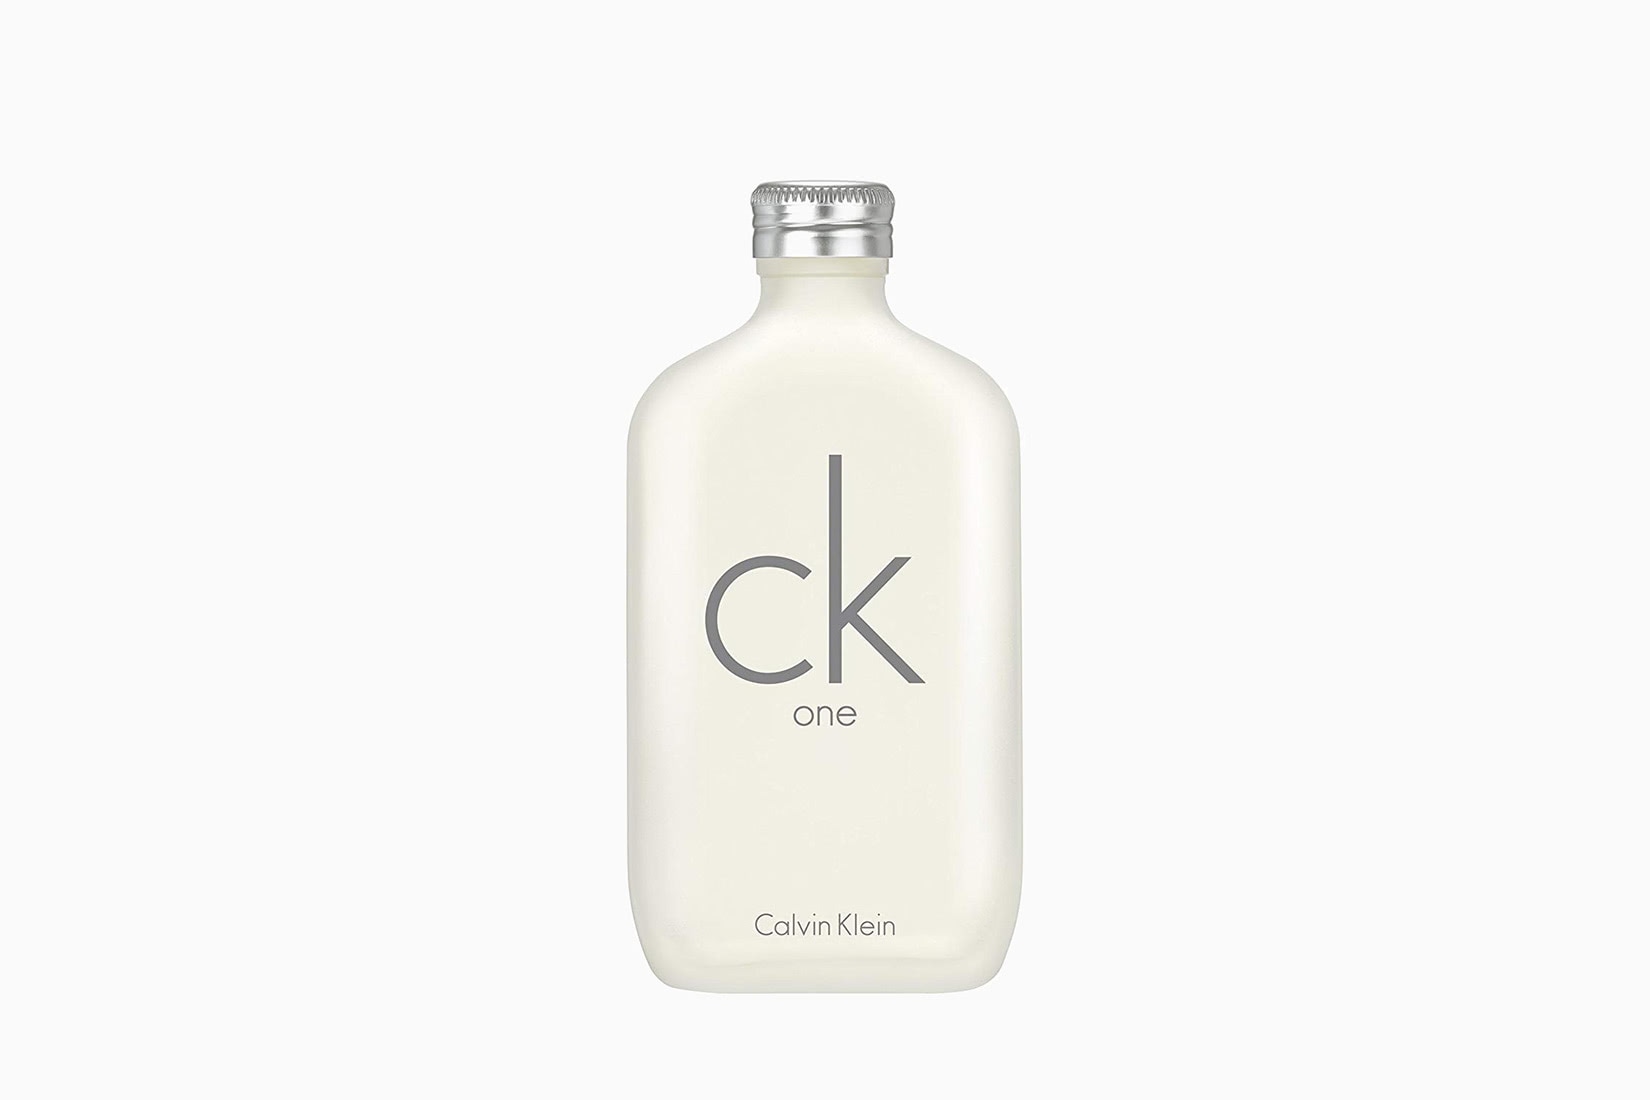 meilleur parfum pour homme calvin klein ck one - Luxe Digital